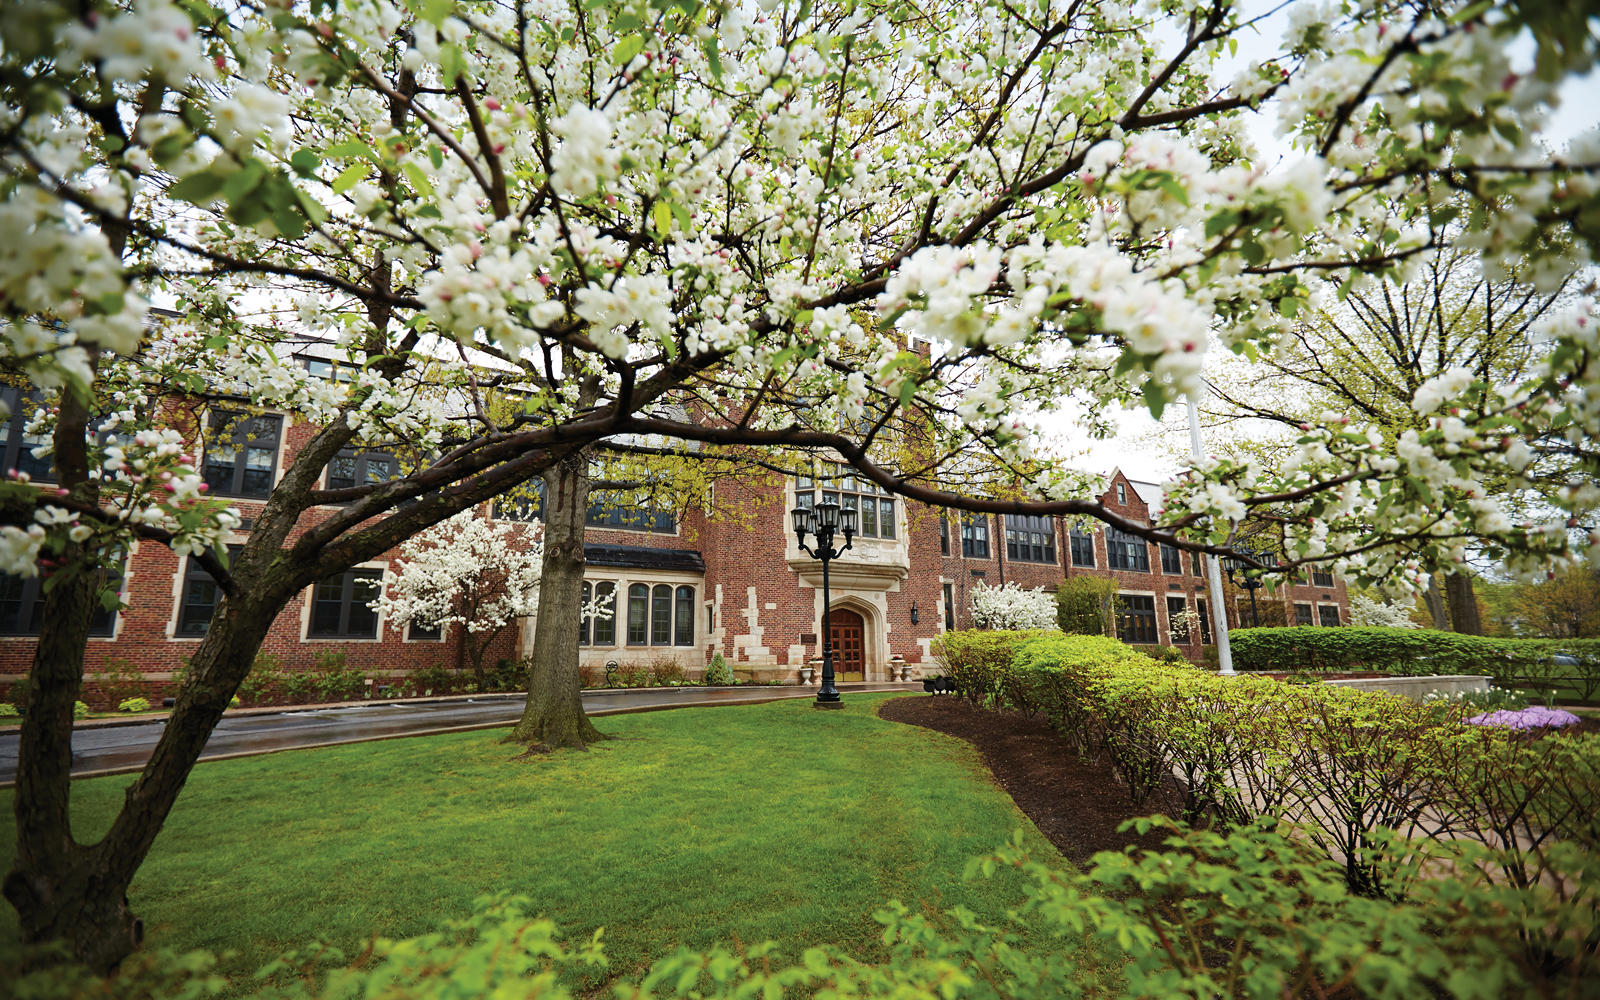 Laurel School's Lyman Campus in Shaker Heights, Ohio by BKedits (CC-SA 4.0 International)